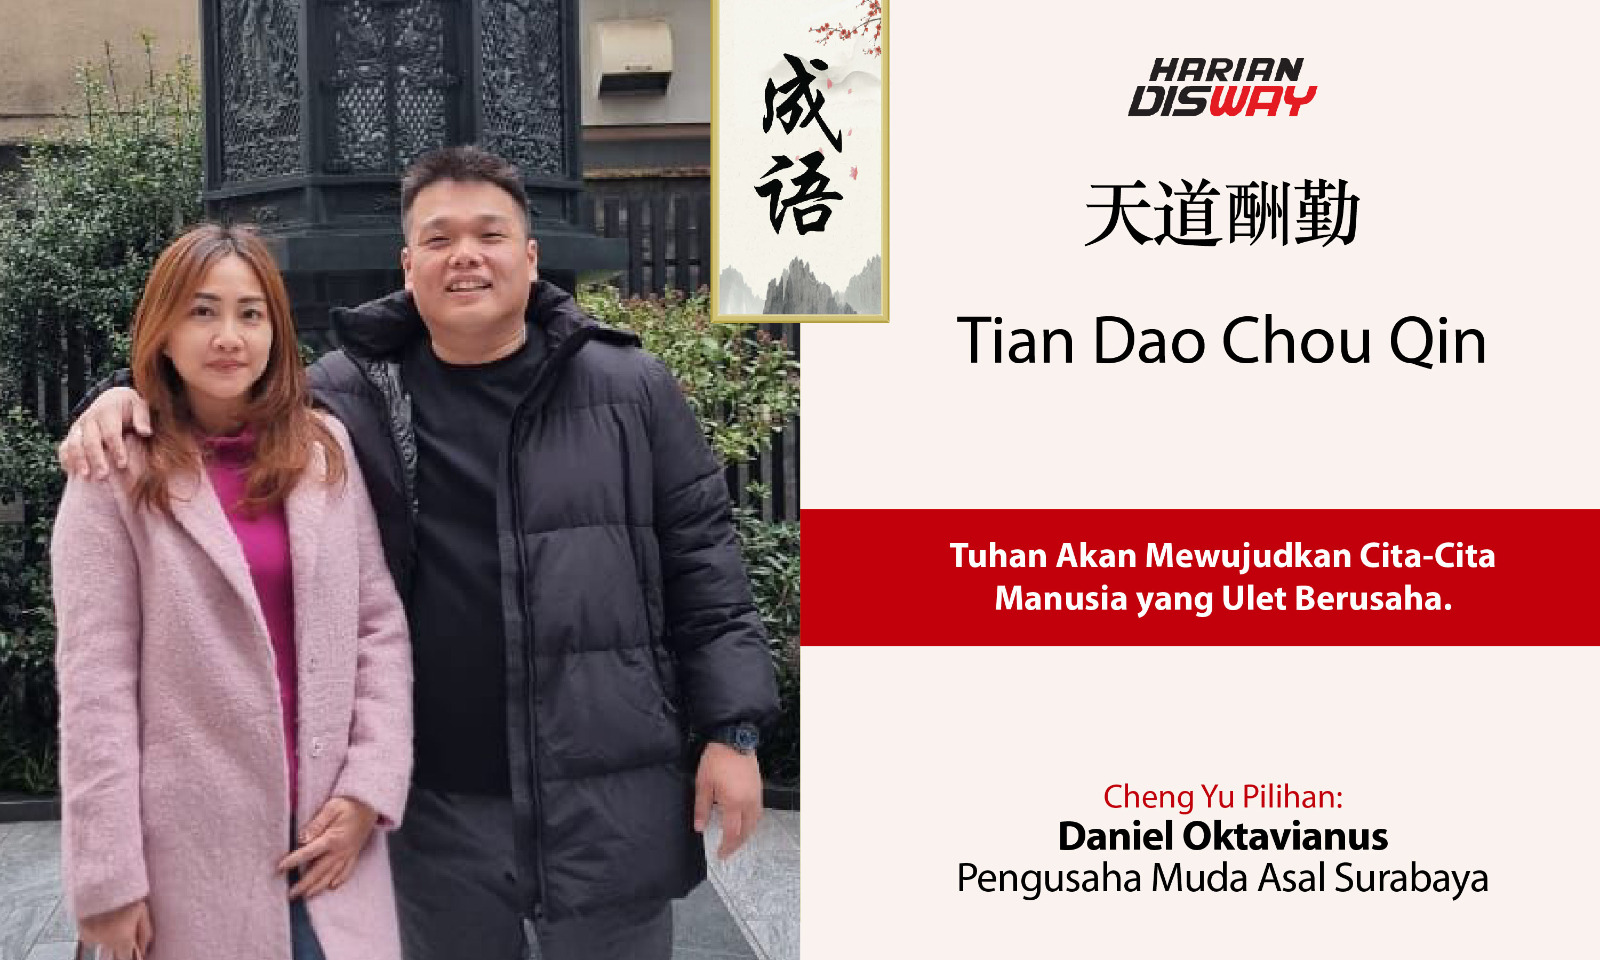 Cheng Yu Pilihan Pengusaha Muda Asal Surabaya Daniel Oktavianus: Tian Dao Chou Qin